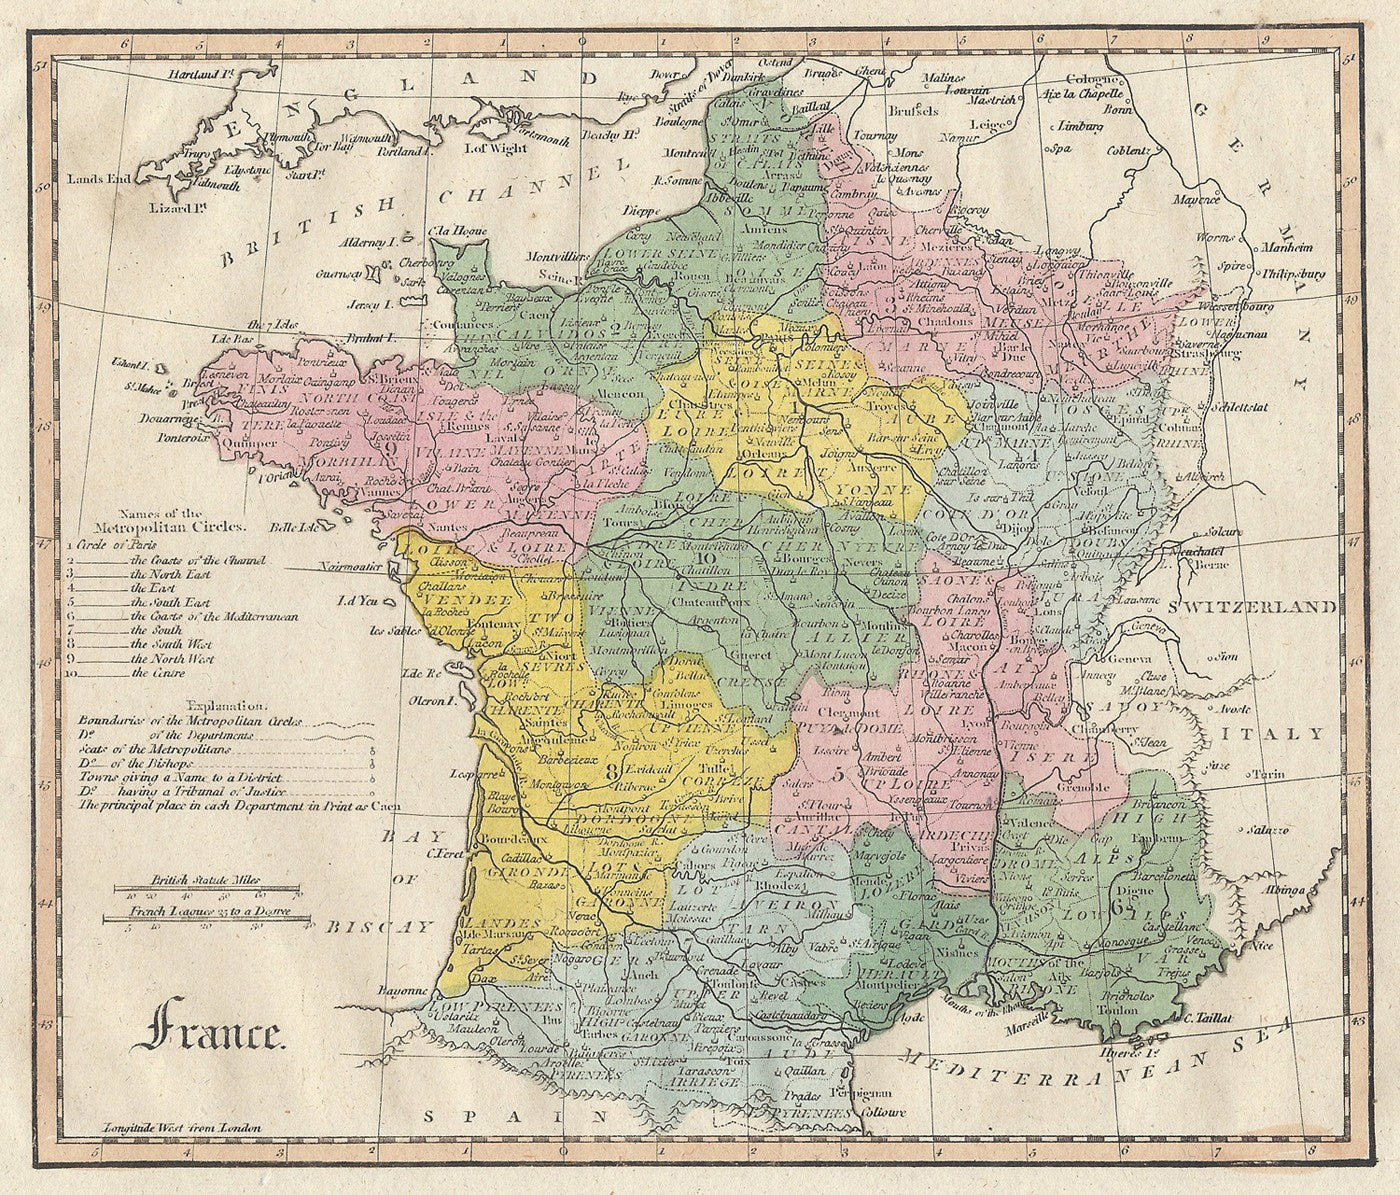 France antique map published 1815